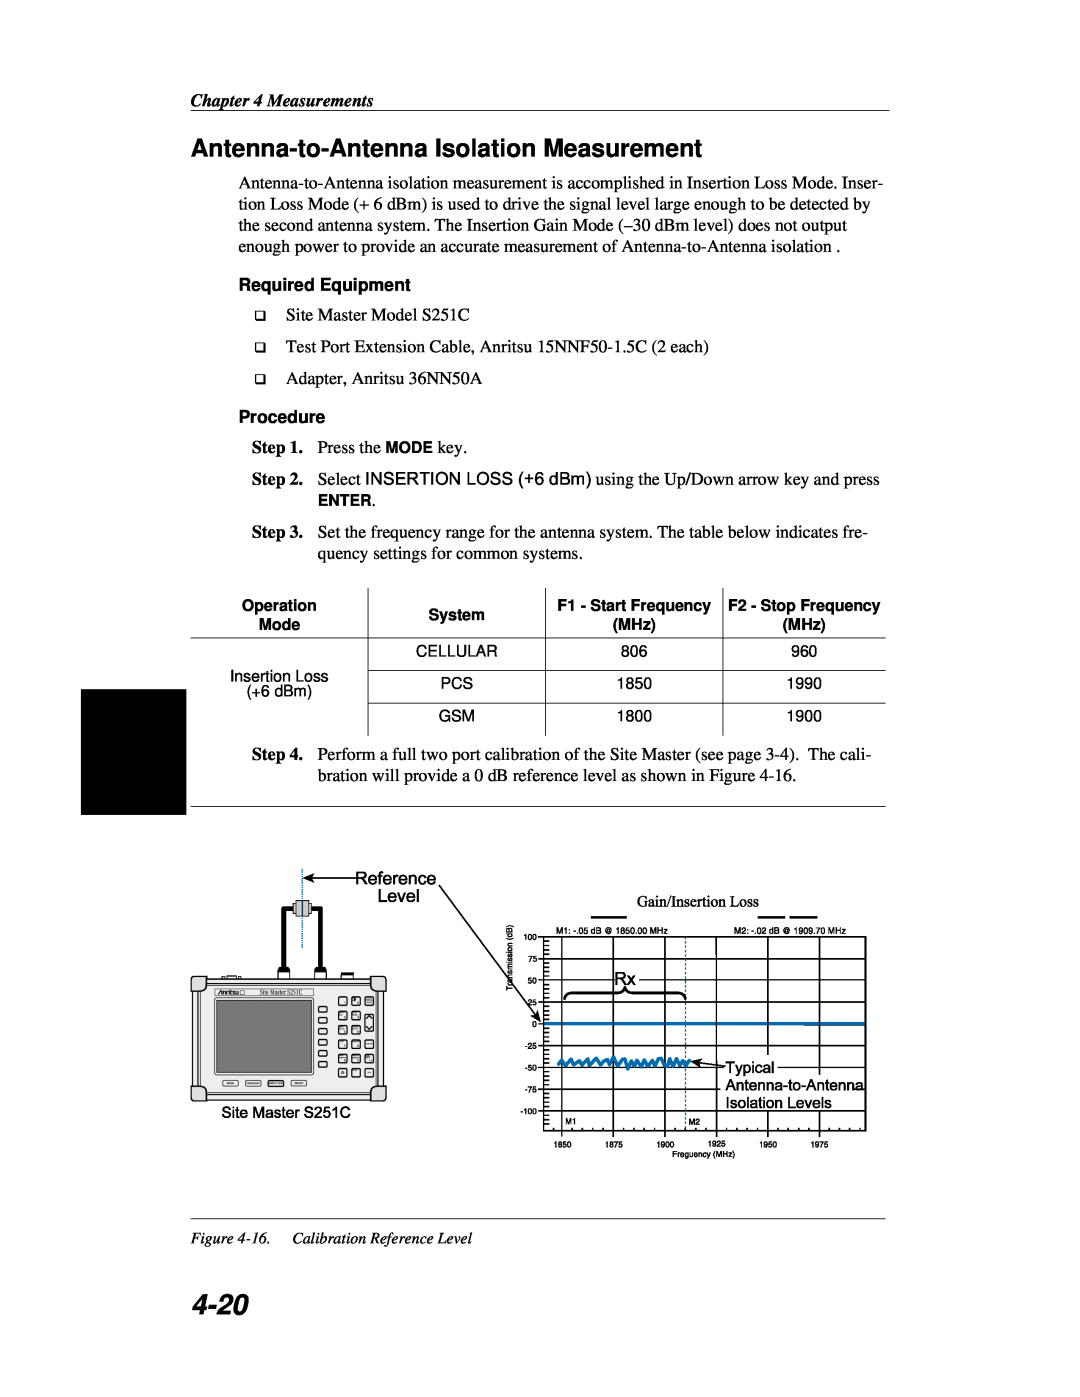 Anritsu S251C manual 4-20, Antenna-to-AntennaIsolation Measurement, Measurements, Required Equipment, Procedure, Step 